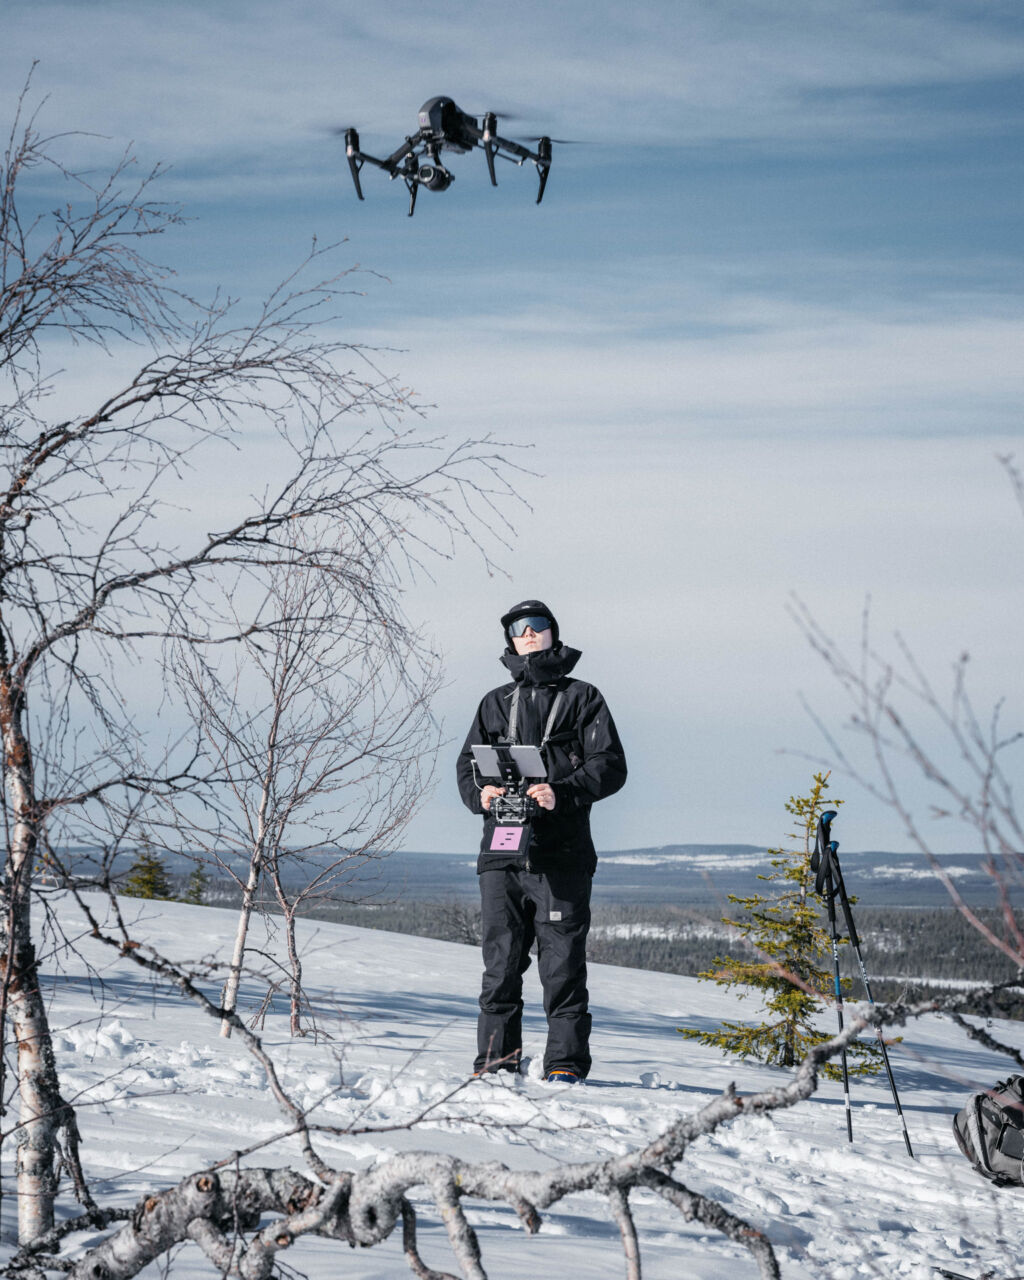 Droneen viitataan suomeksi monella eri tavalla, kuten drooni, miehittämätön pieni ilma-alus, UAV (Unmanned Aerial Vehicle) ja UAS (Unmanned Aerial System).